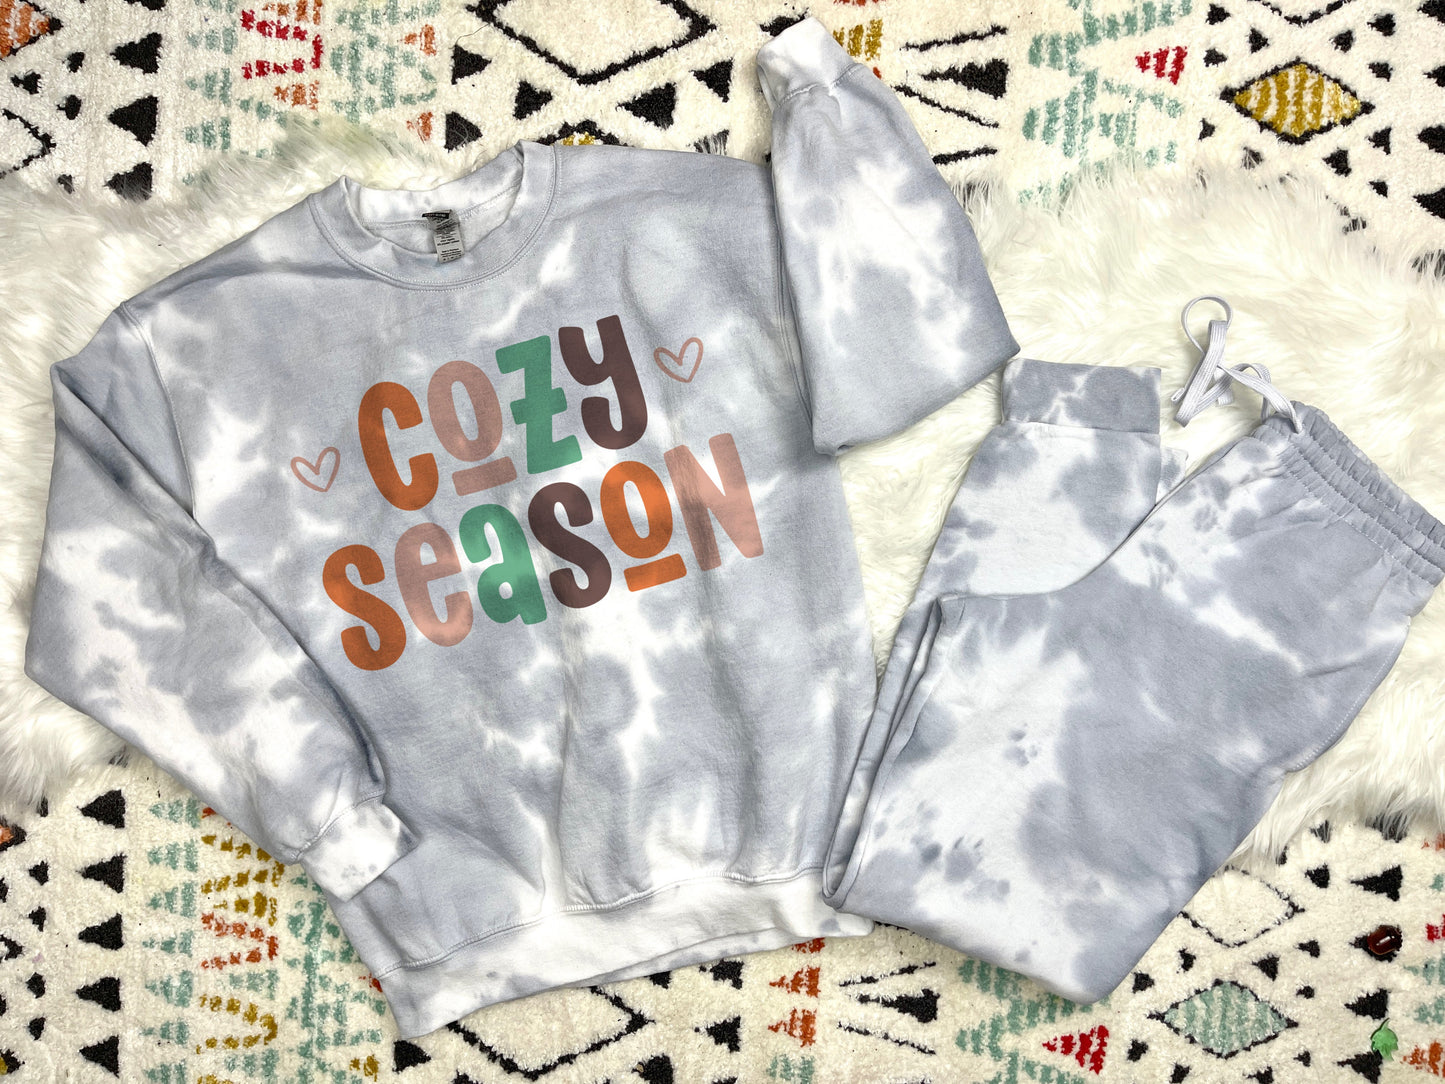 Cozy season grey dyed set